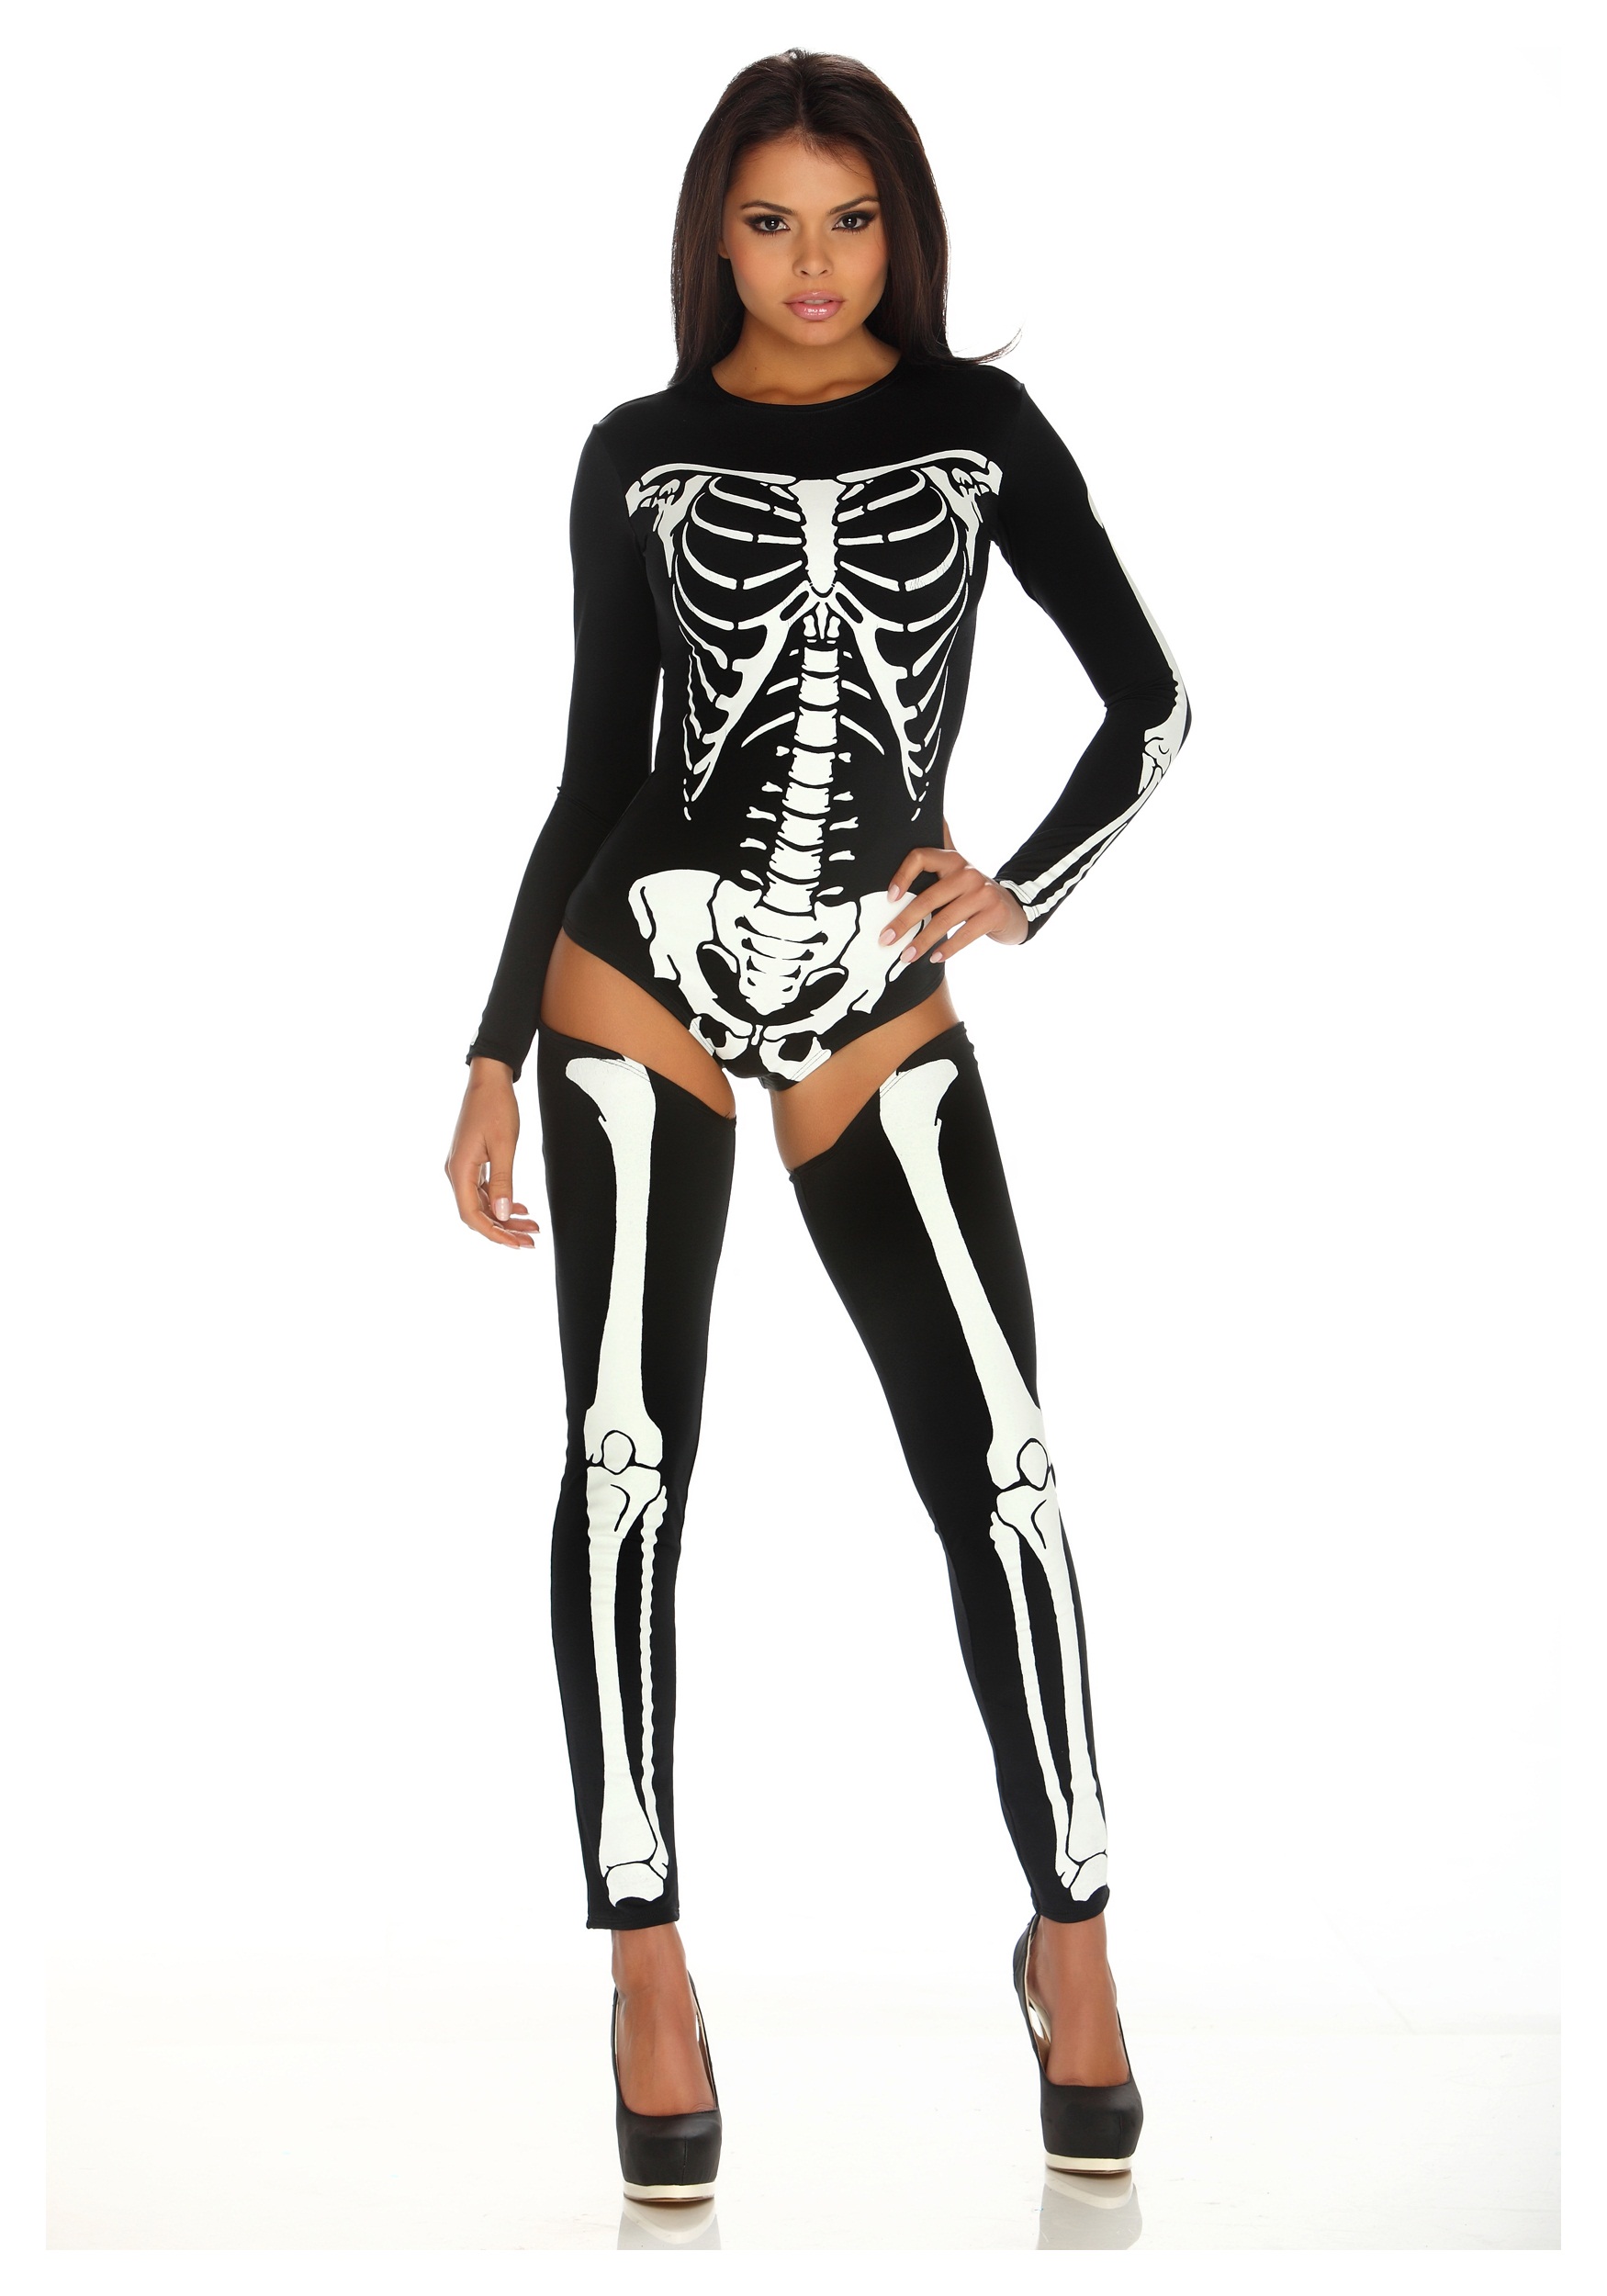 Bad To The Bone Fancy Dress Costume For Women , Women's Skeleton Fancy Dress Costumes